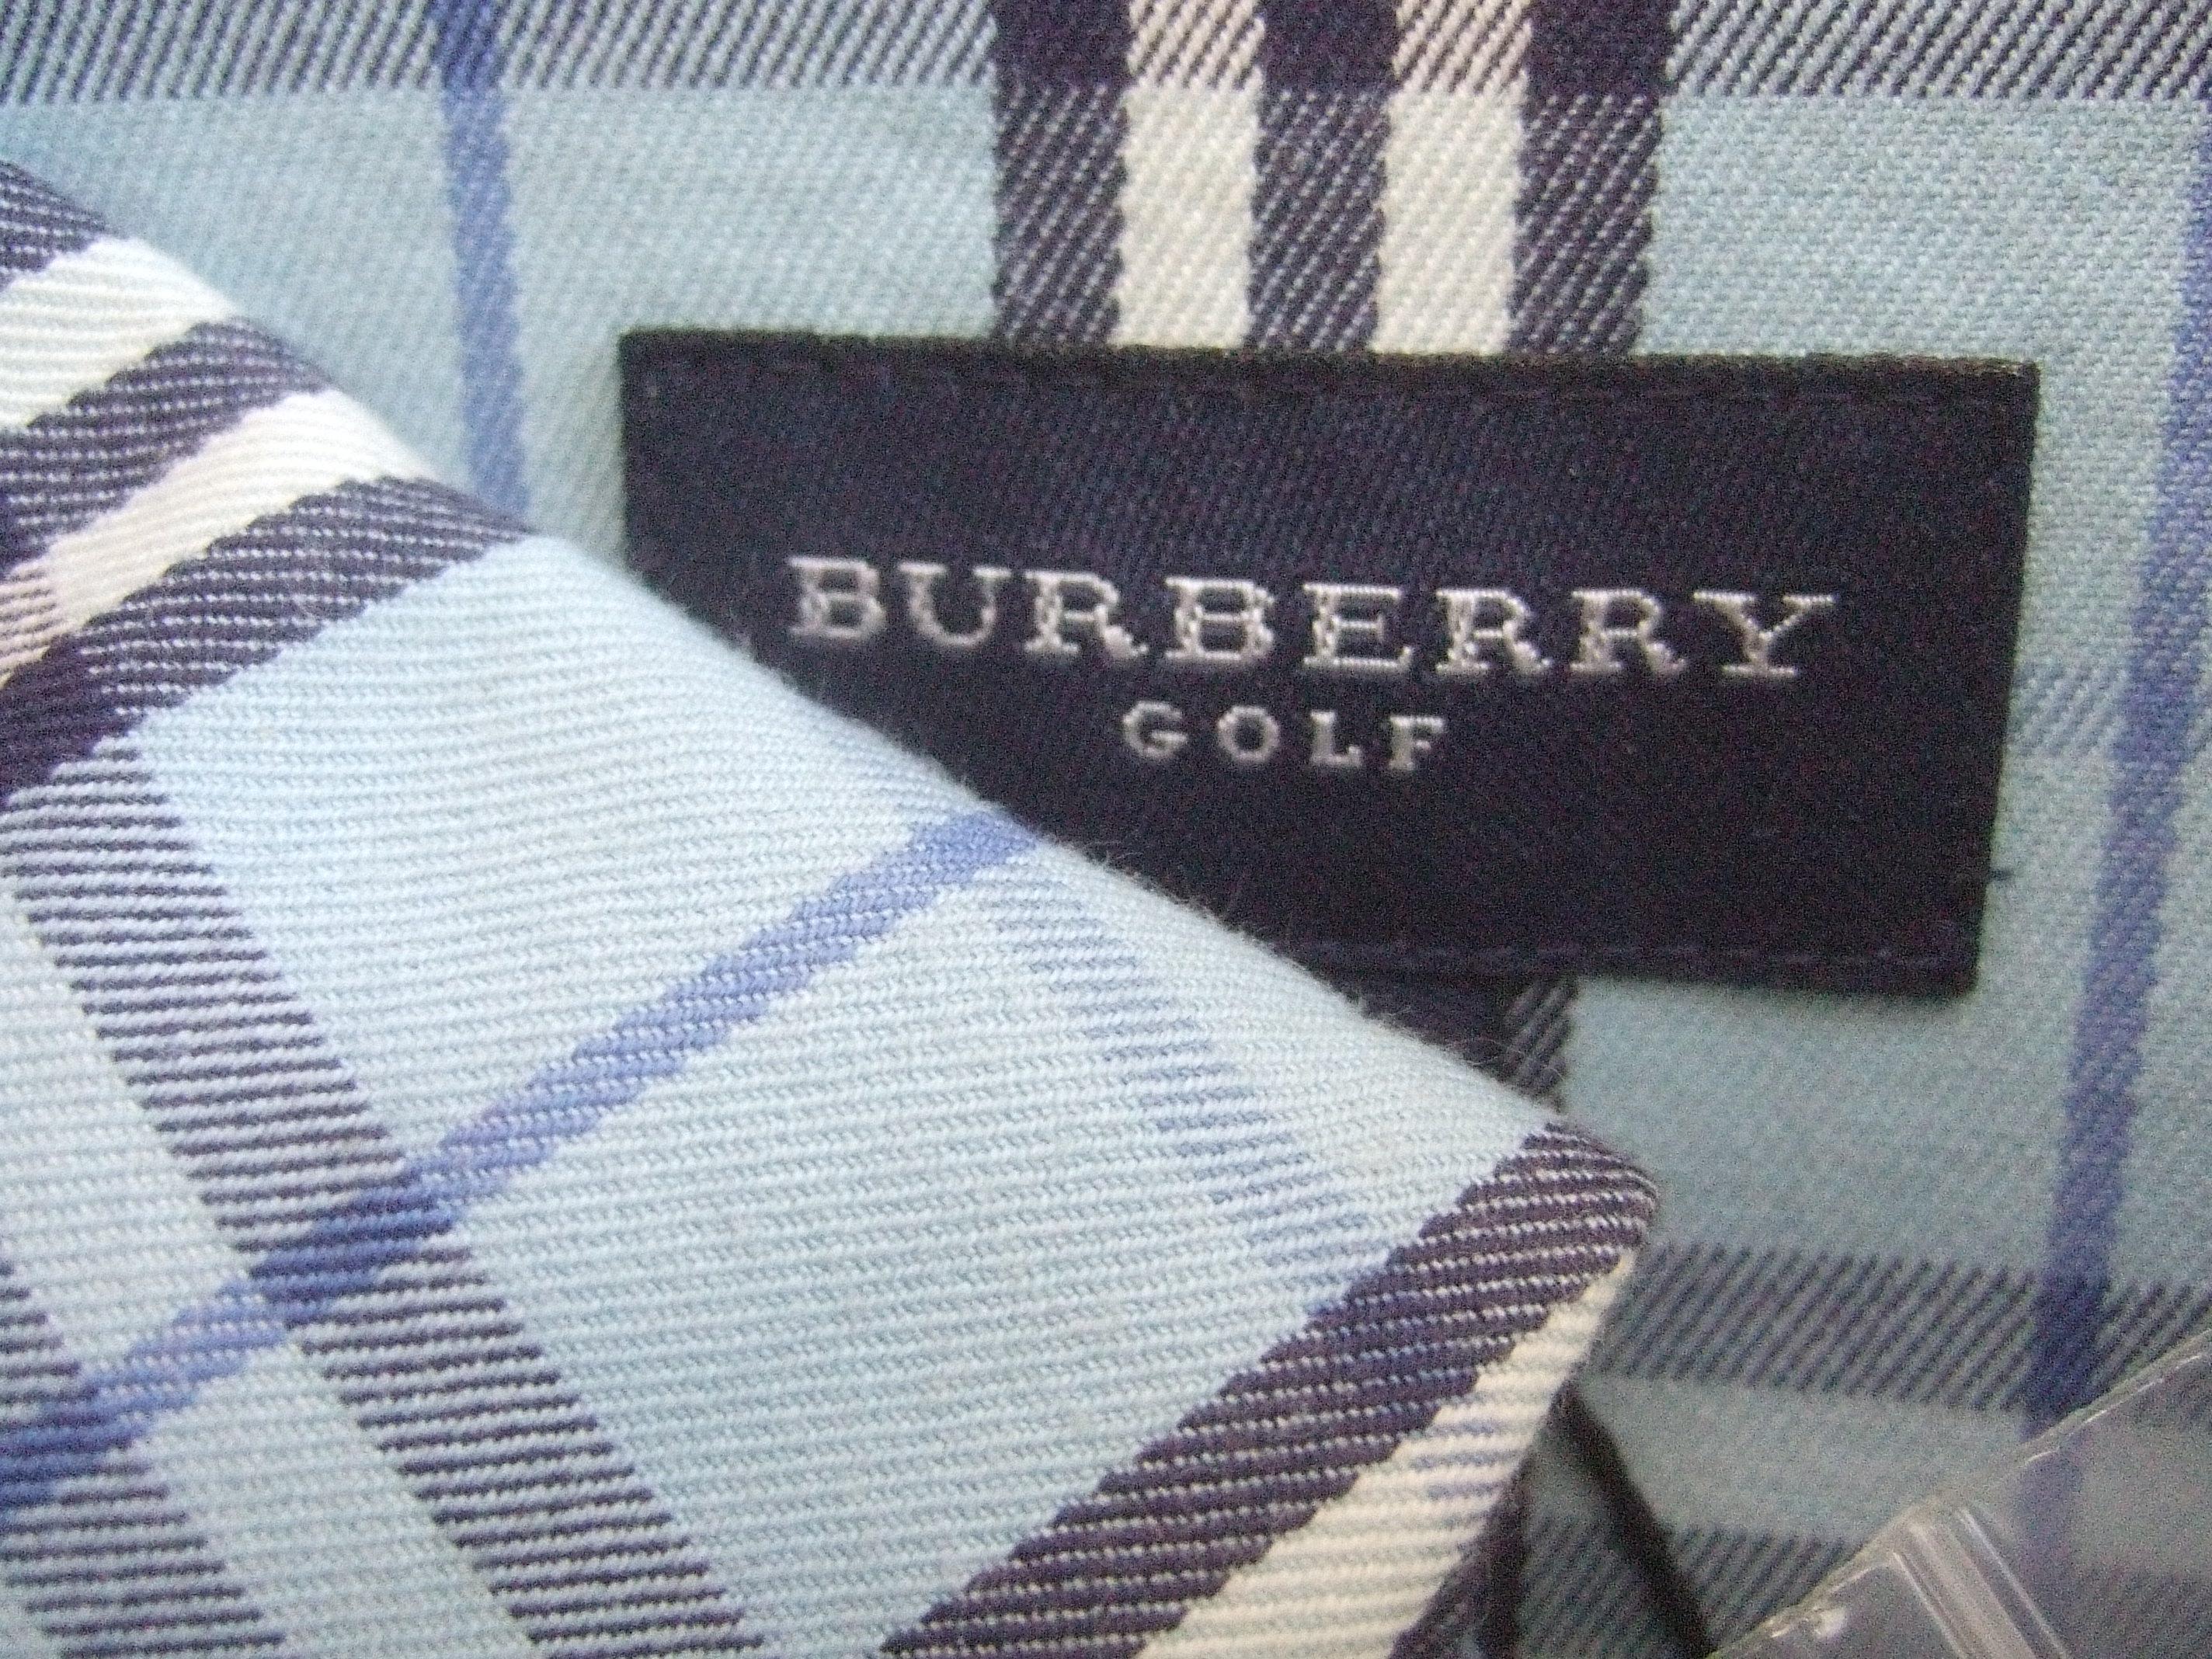 Burberry Golf Blue Nova Plaid Zippered Women's Cotton Sports Jacket 21st C 5